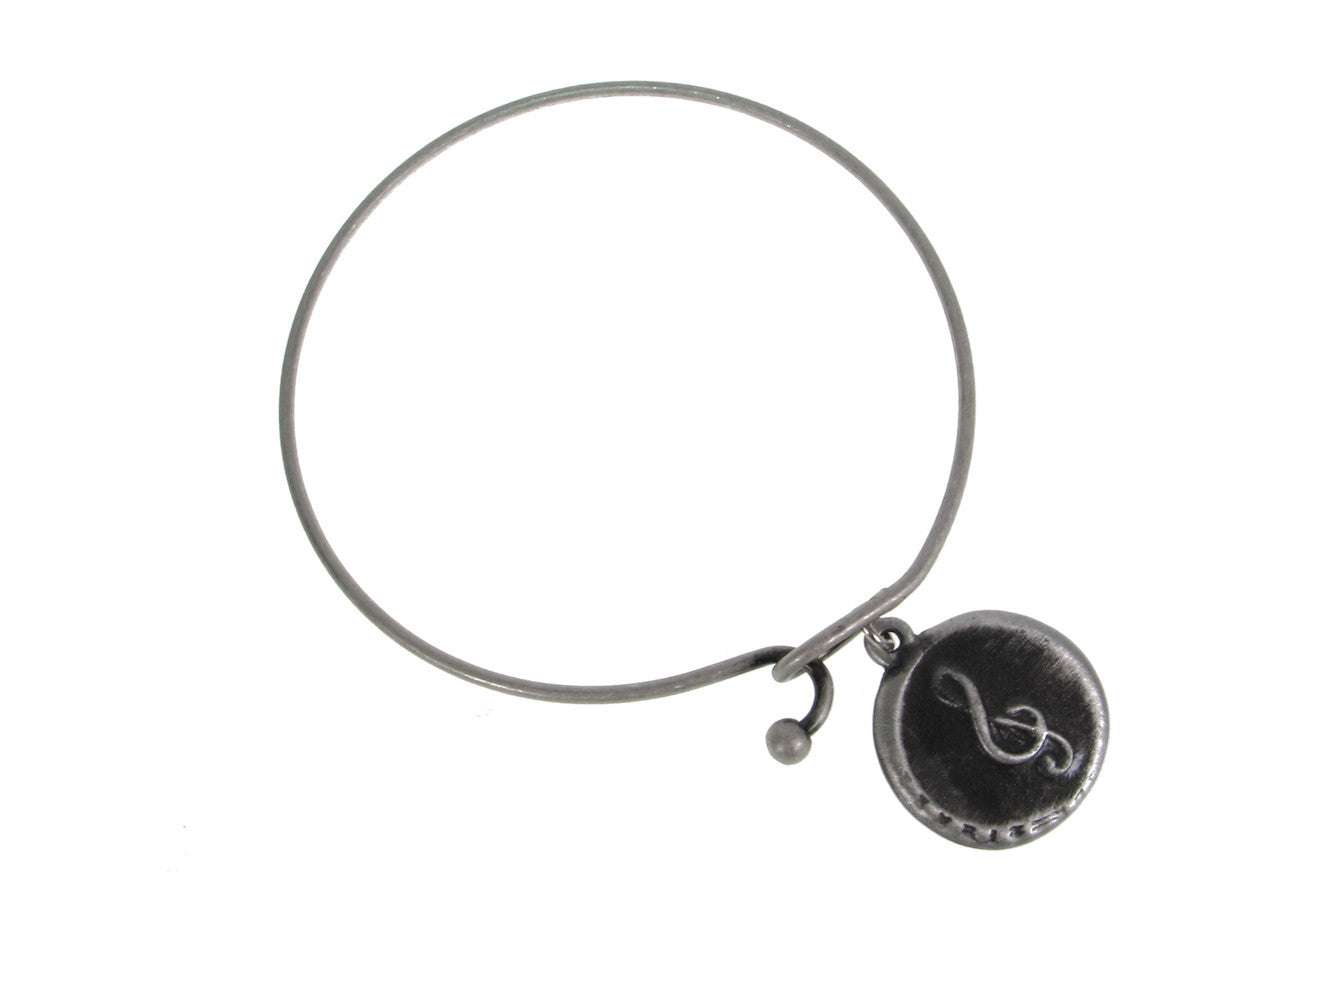 Musical Note Charm Bracelet | Erica Zap Designs